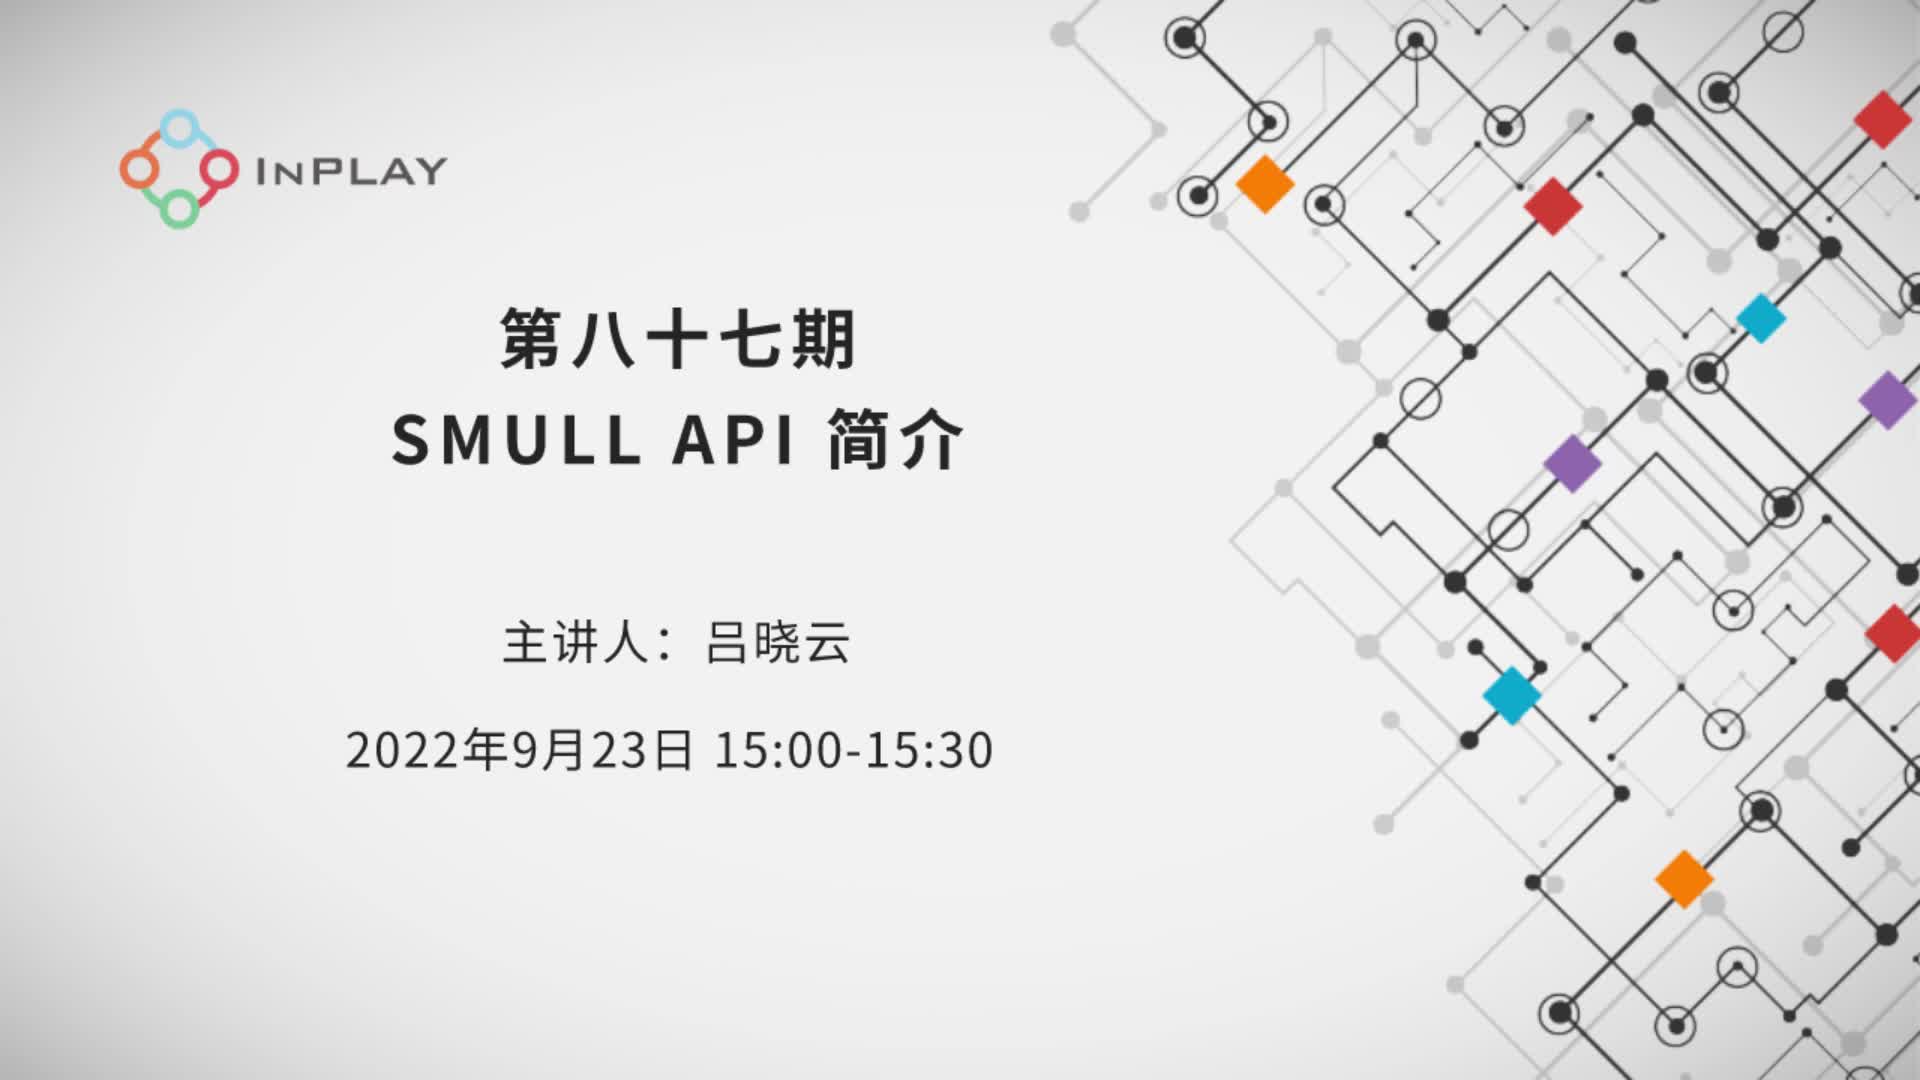 SMULL API 简介